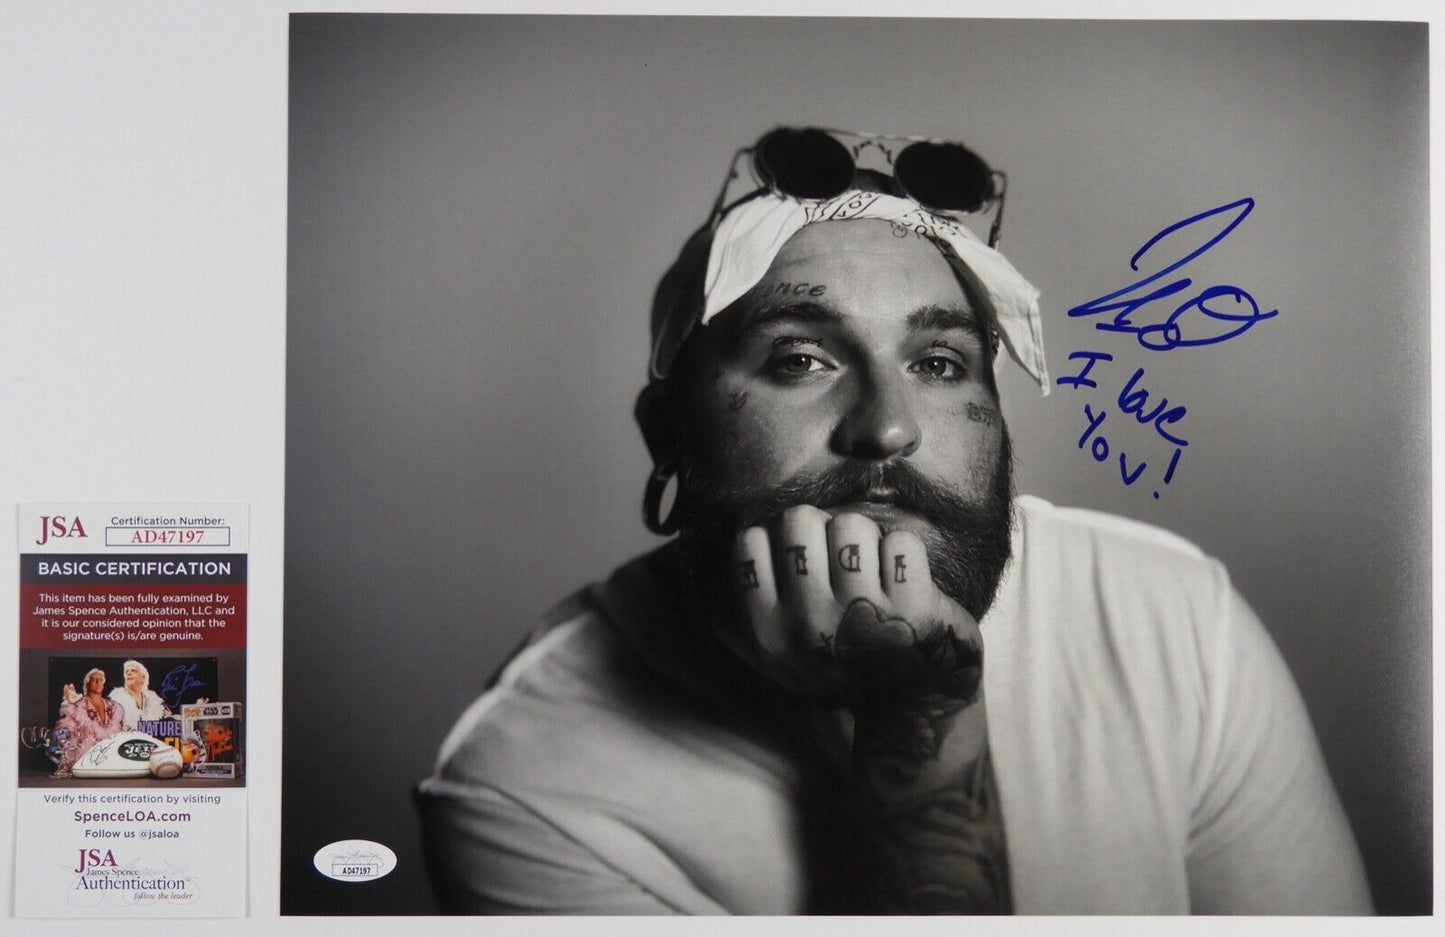 Teddy Swims JSA Signed Autograph Photo 11 x 14